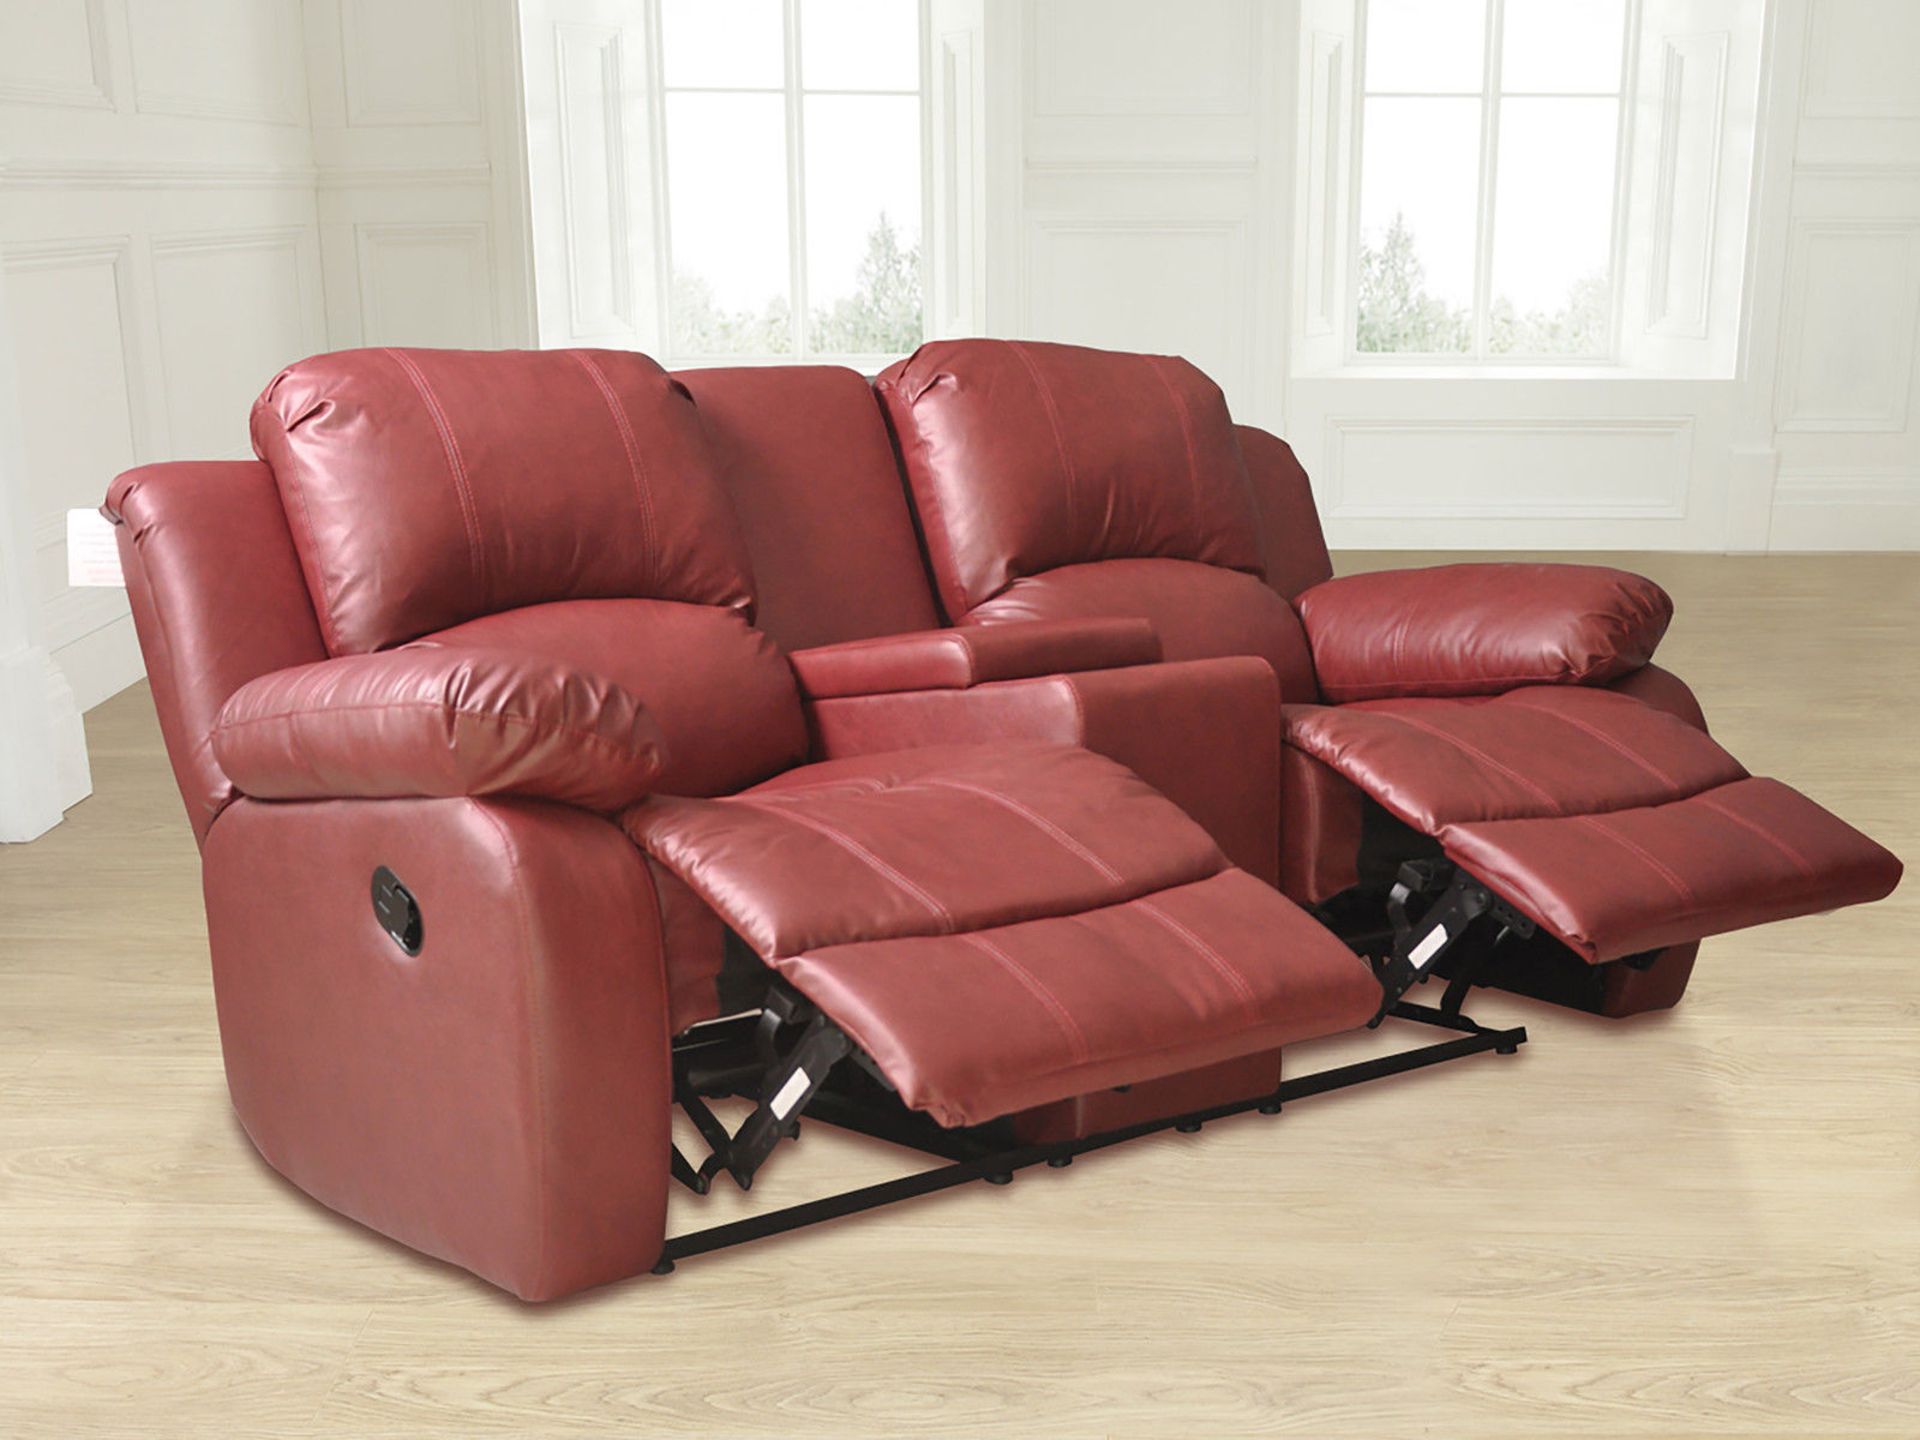 Supreme Valance burgandy leather 3 seater reclining sofa